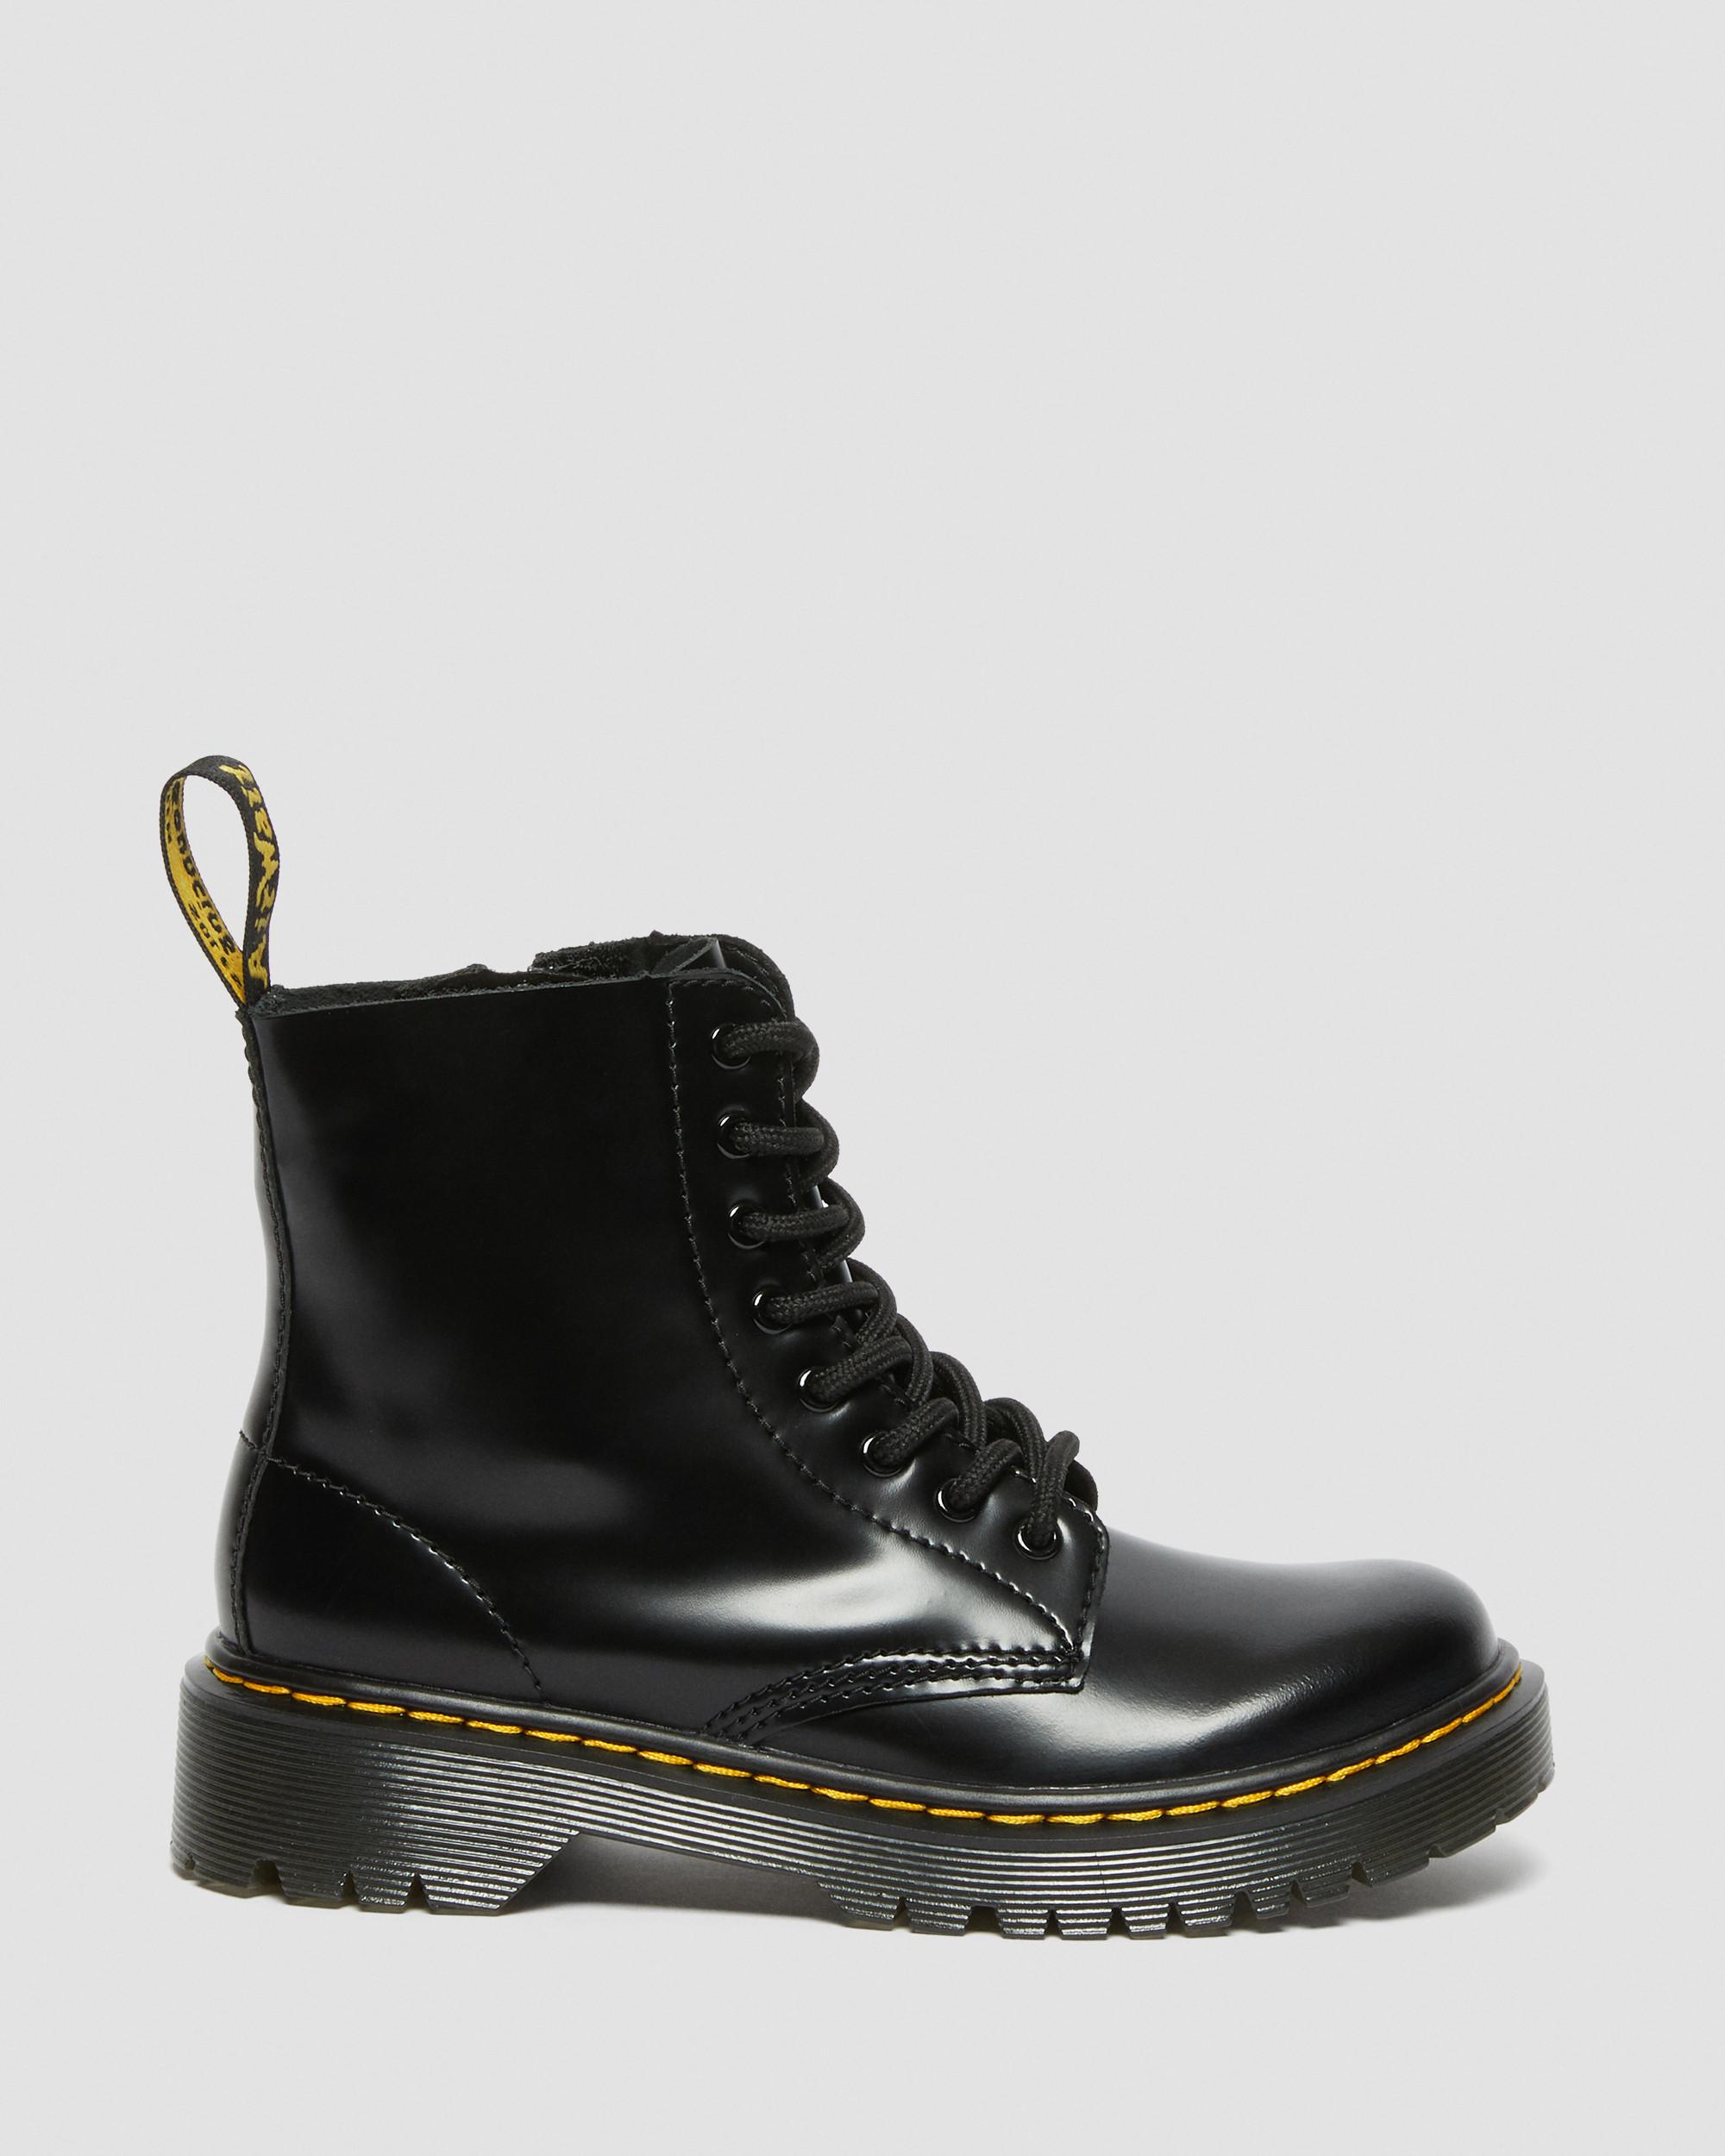 Junior 1460 Pascal Bex Leather Lace Up Boots, Black | Dr. Martens